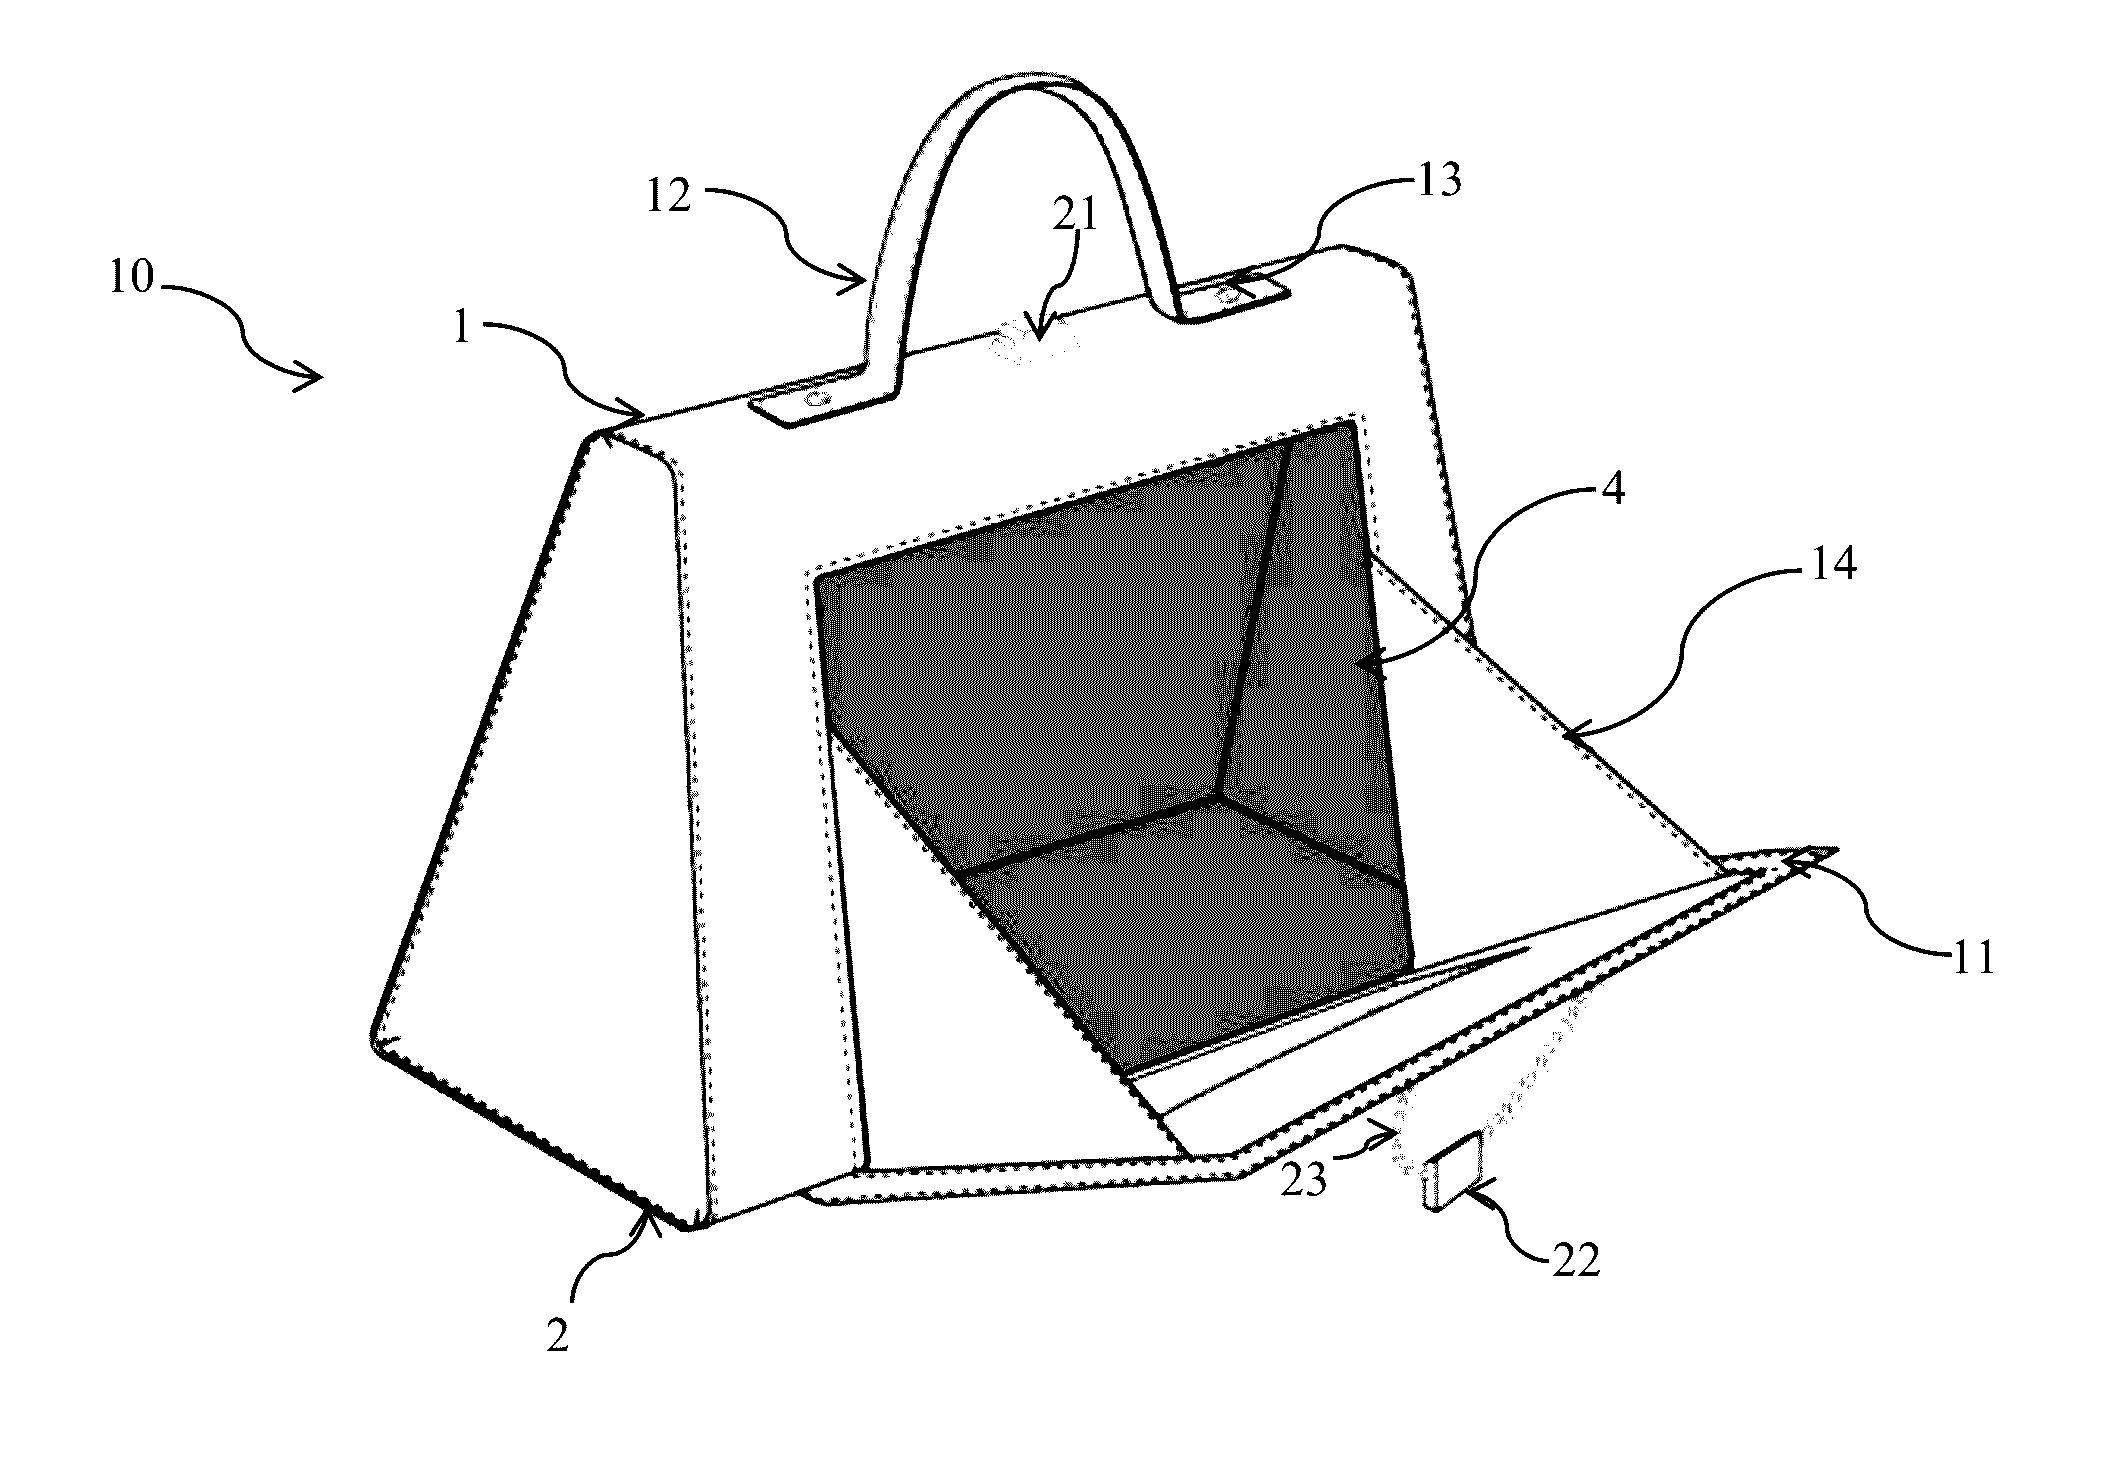 Handbag With Drop Style Opening and Custom Hardware